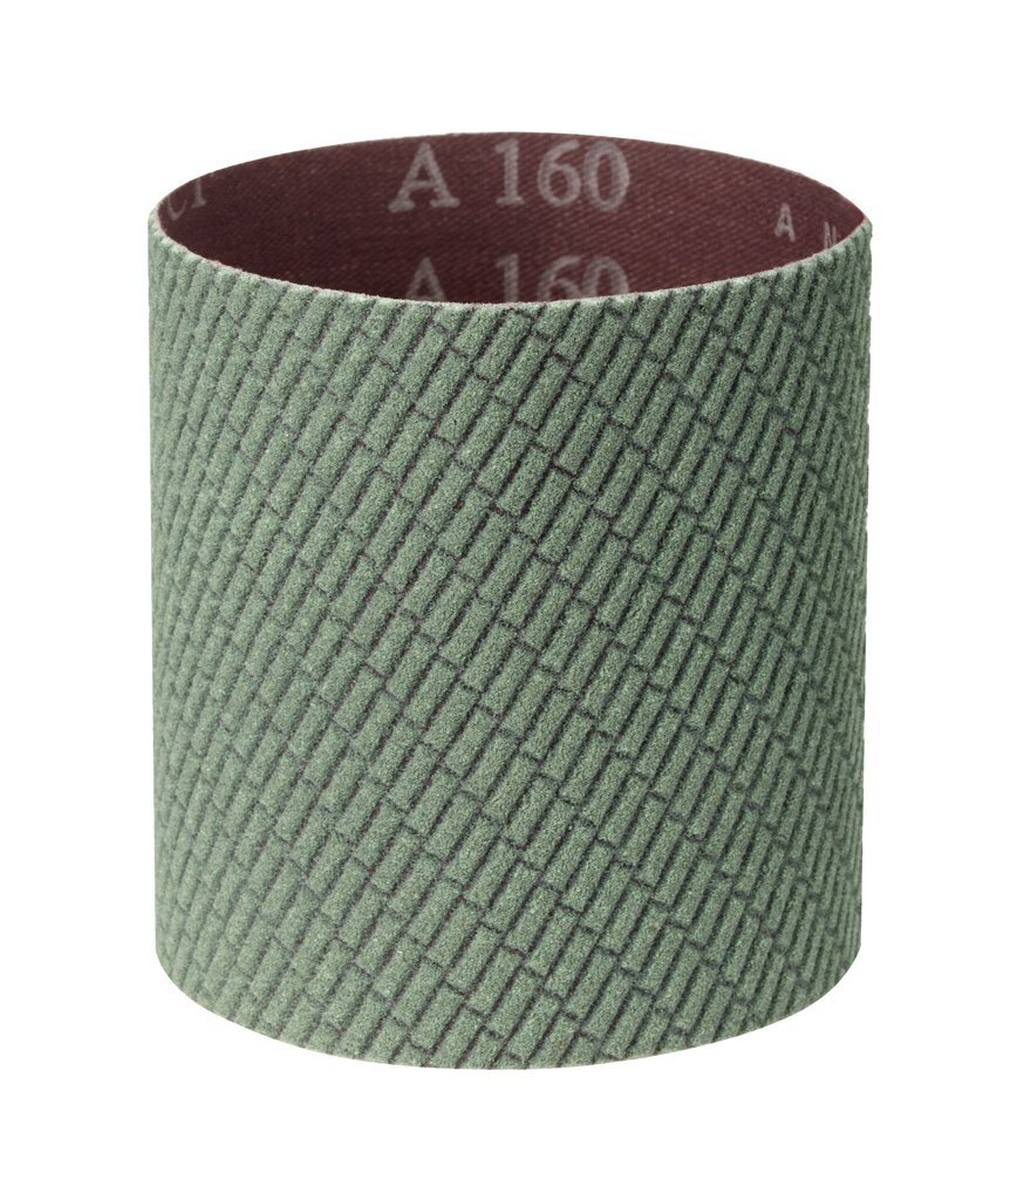 3M Trizact abrasive belt 337DC, 100 mm x 289 mm, A100 #60170